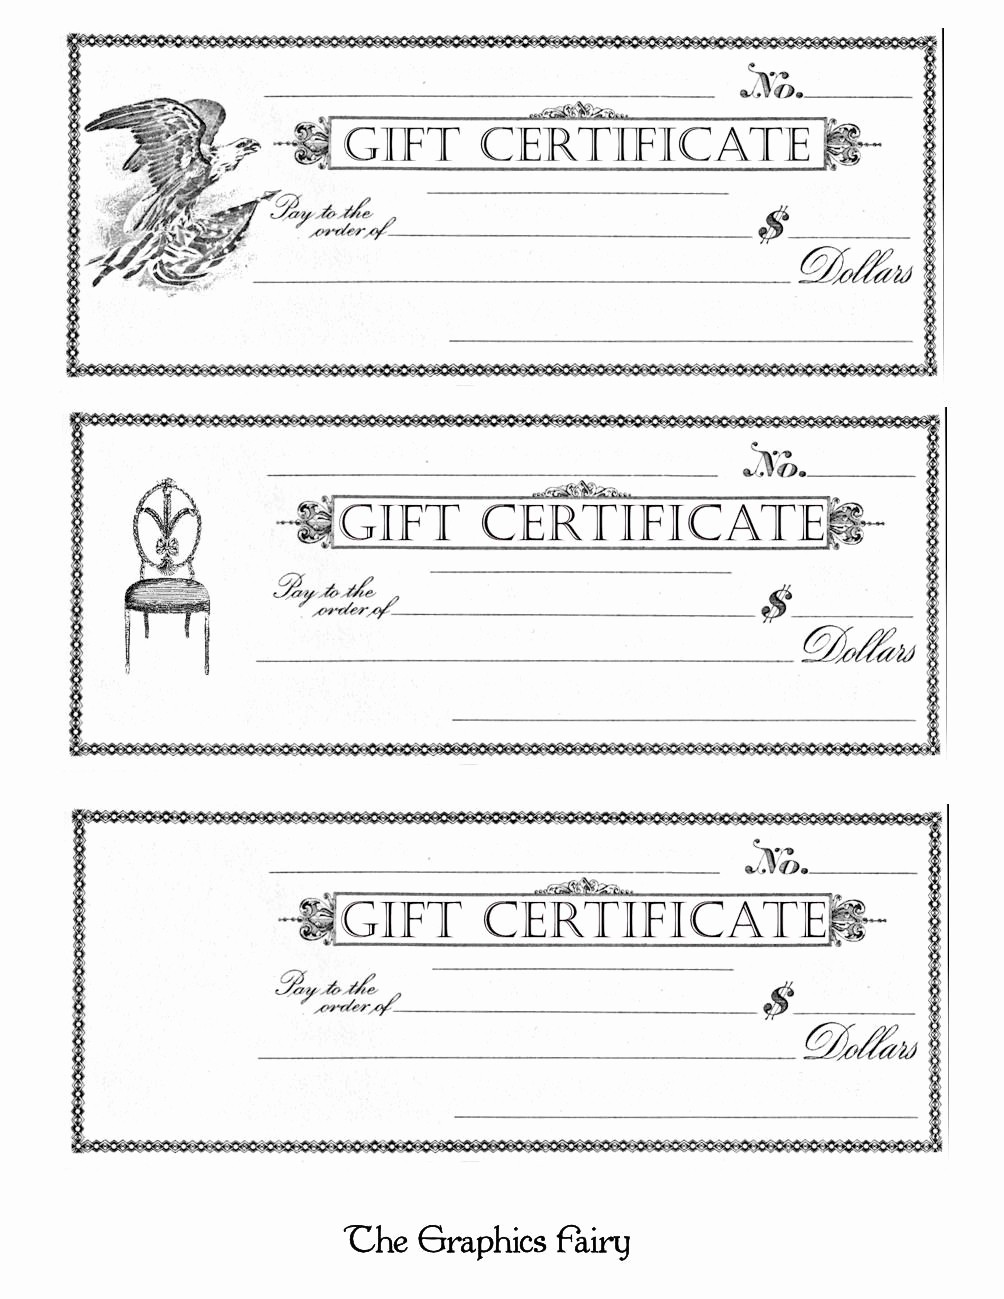 Free Gift Certificates to Print Fresh Free Printable Gift Certificates the Graphics Fairy